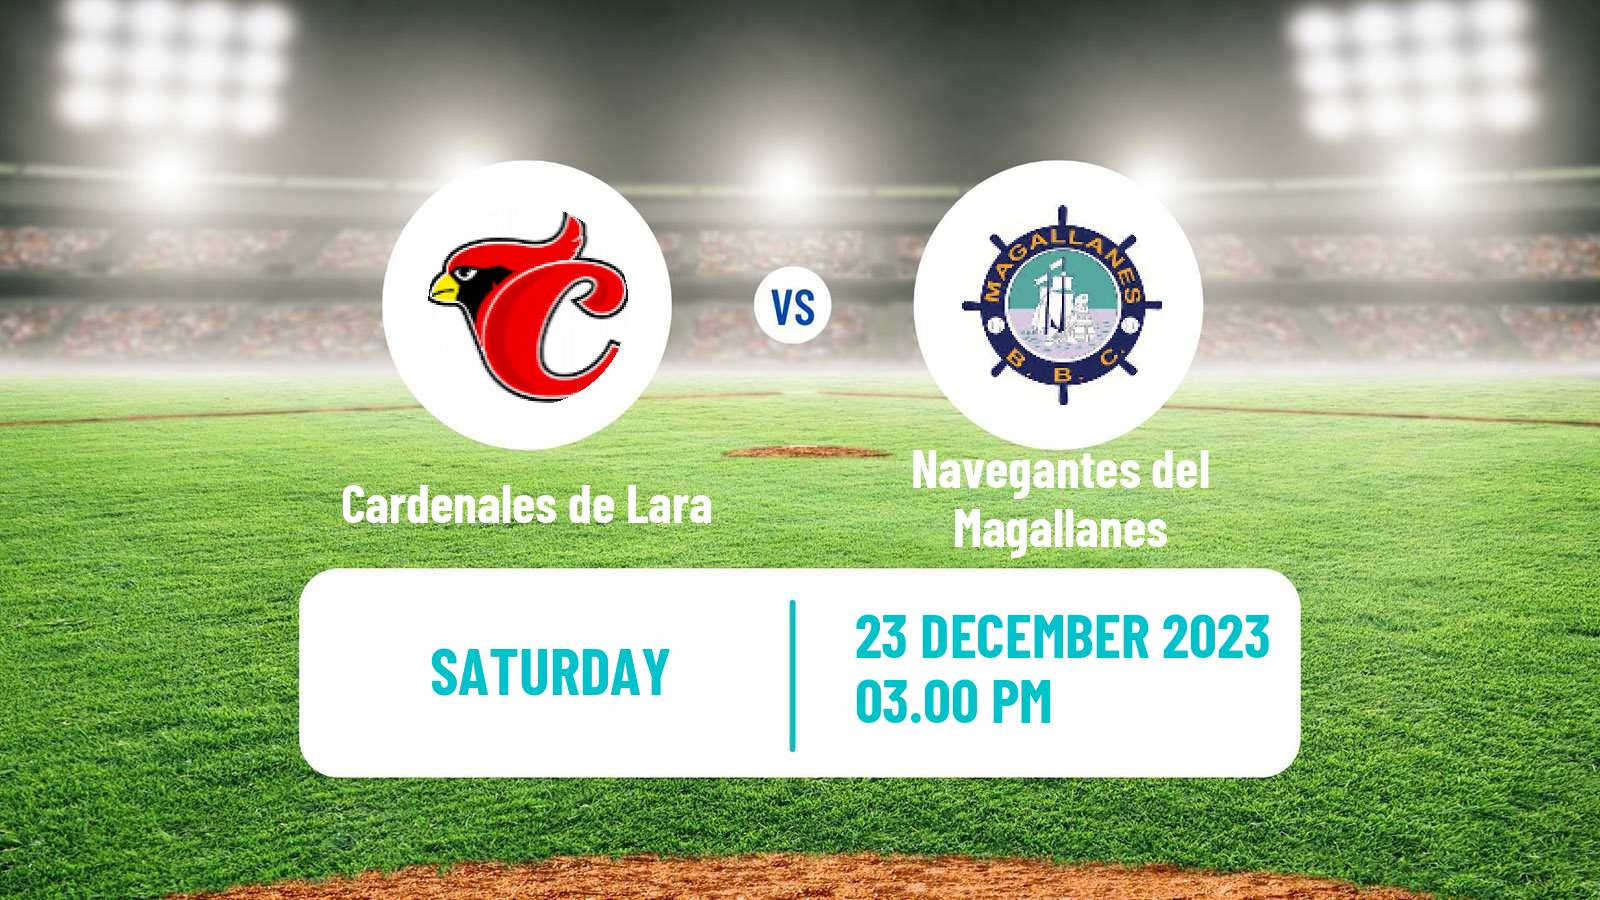 Baseball Venezuelan LVBP Cardenales de Lara - Navegantes del Magallanes